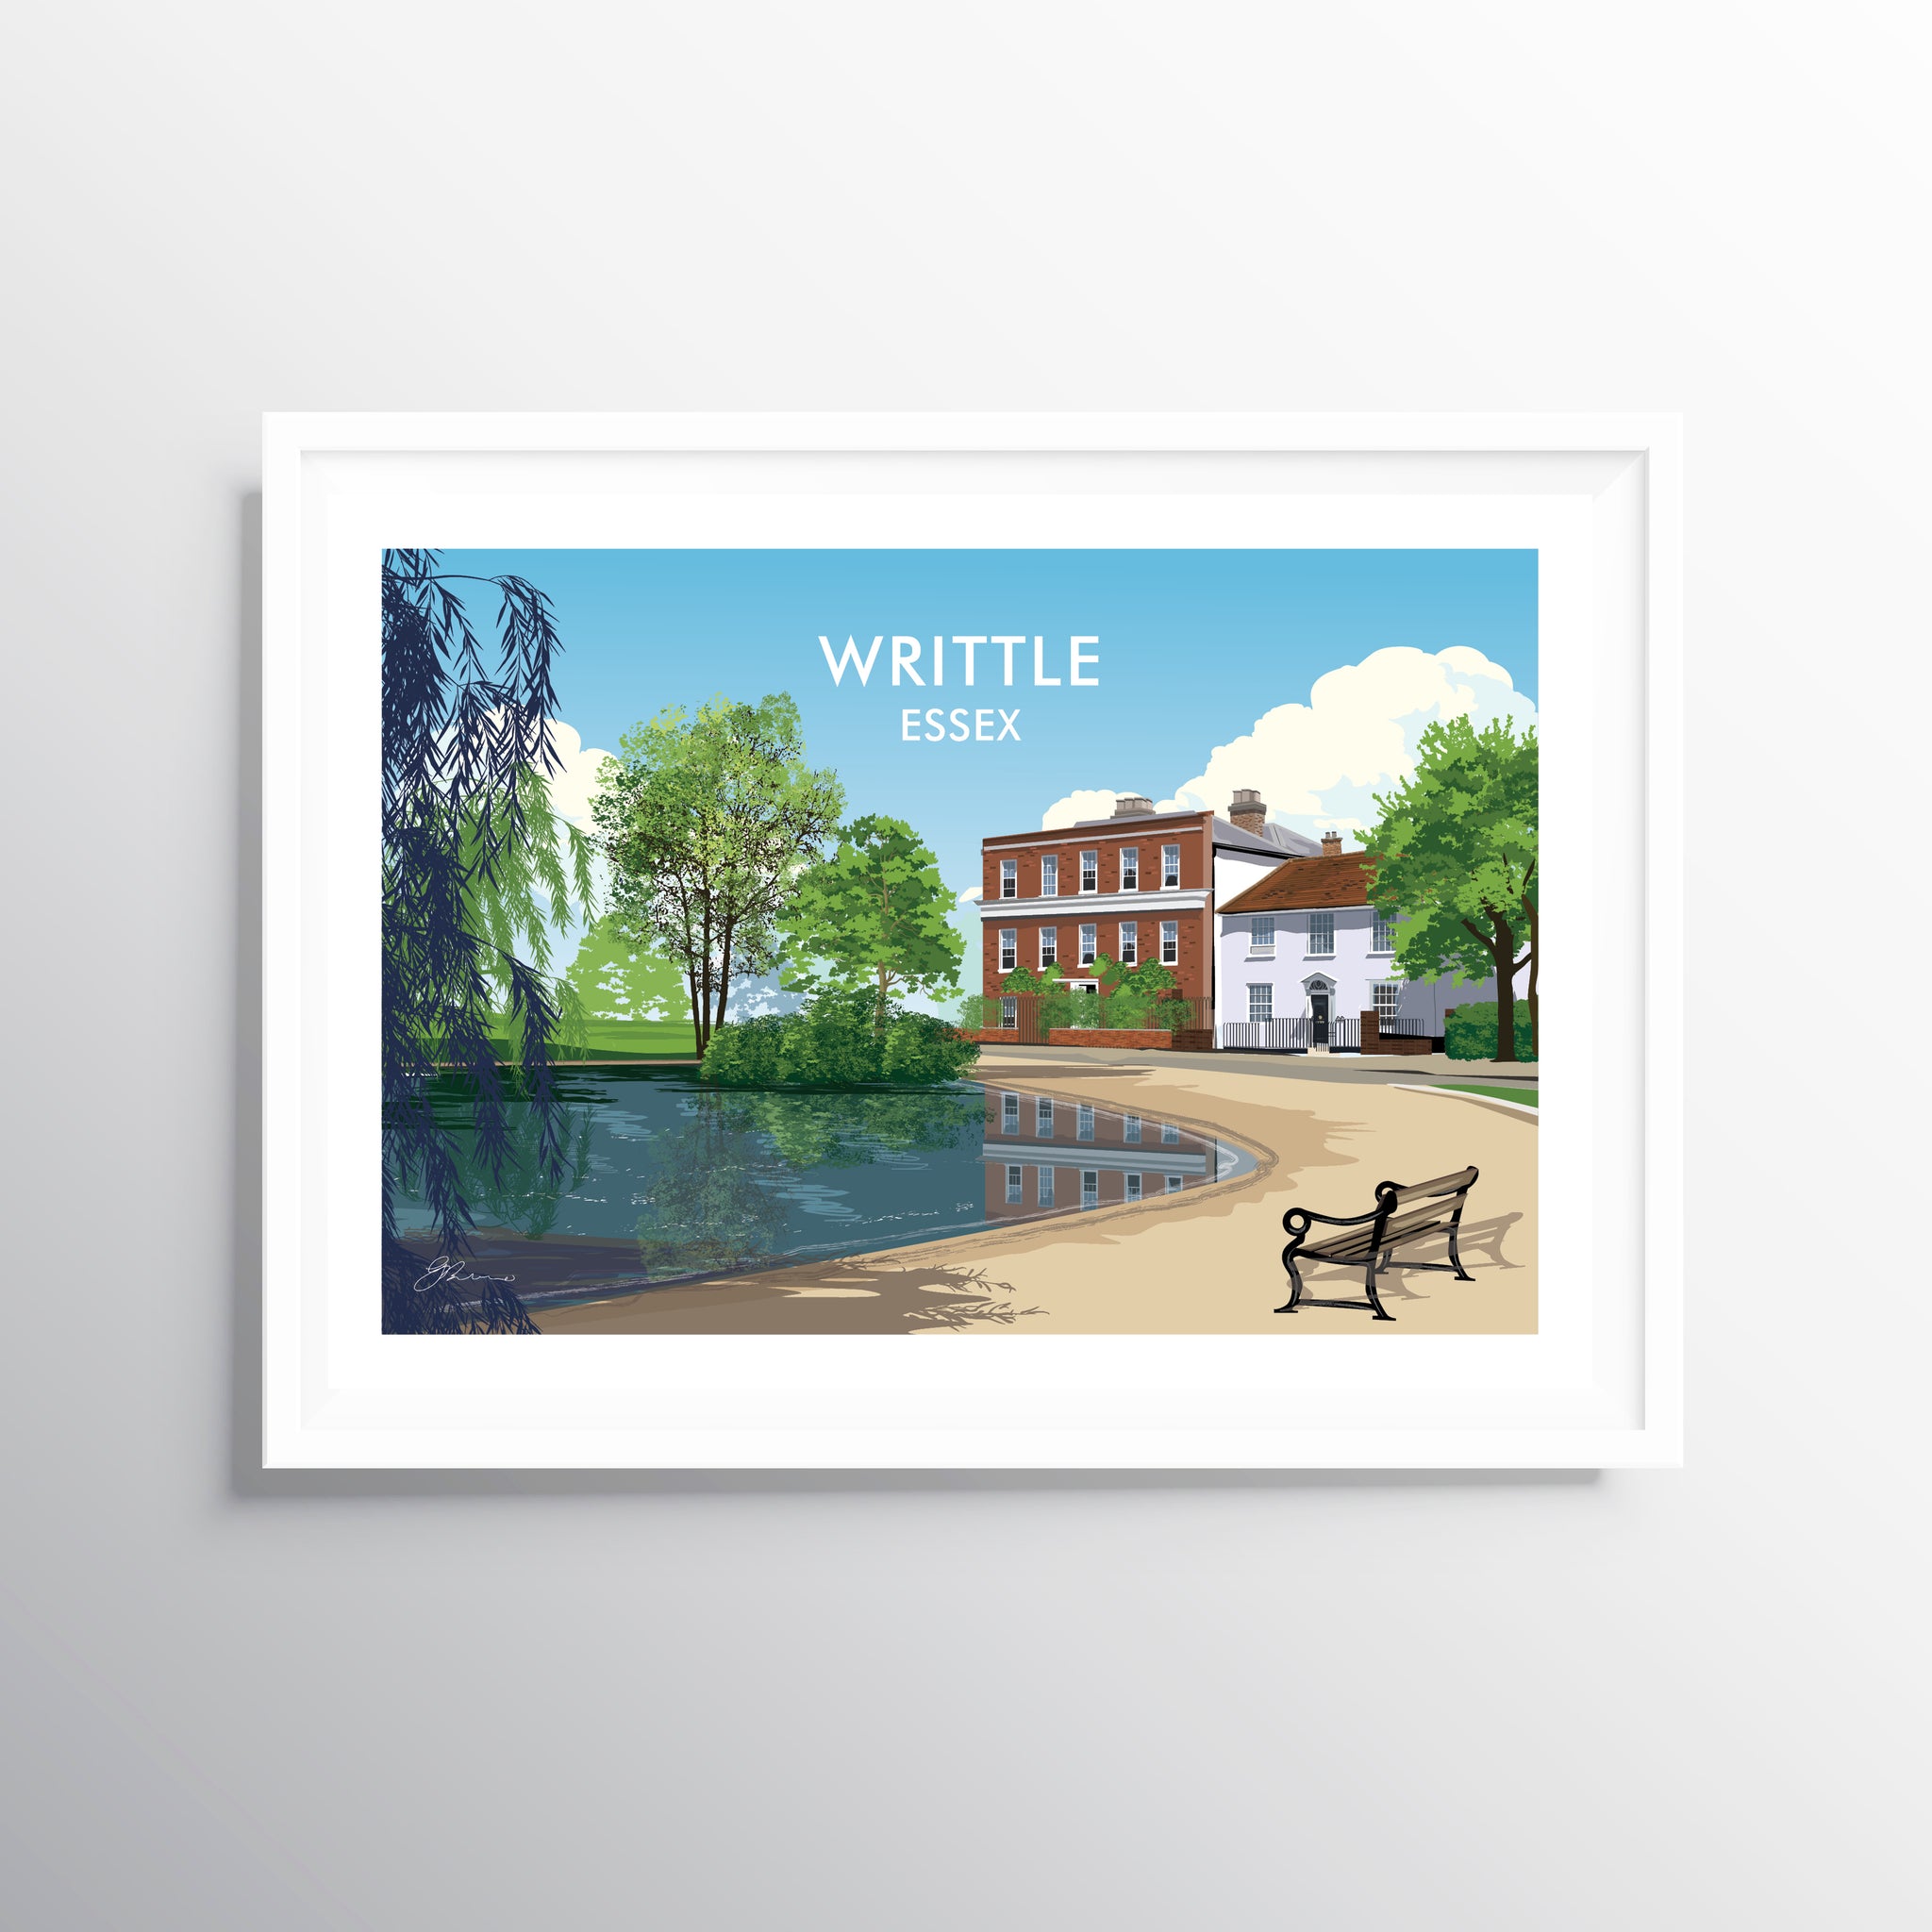 'Writtle' Travel Art Print